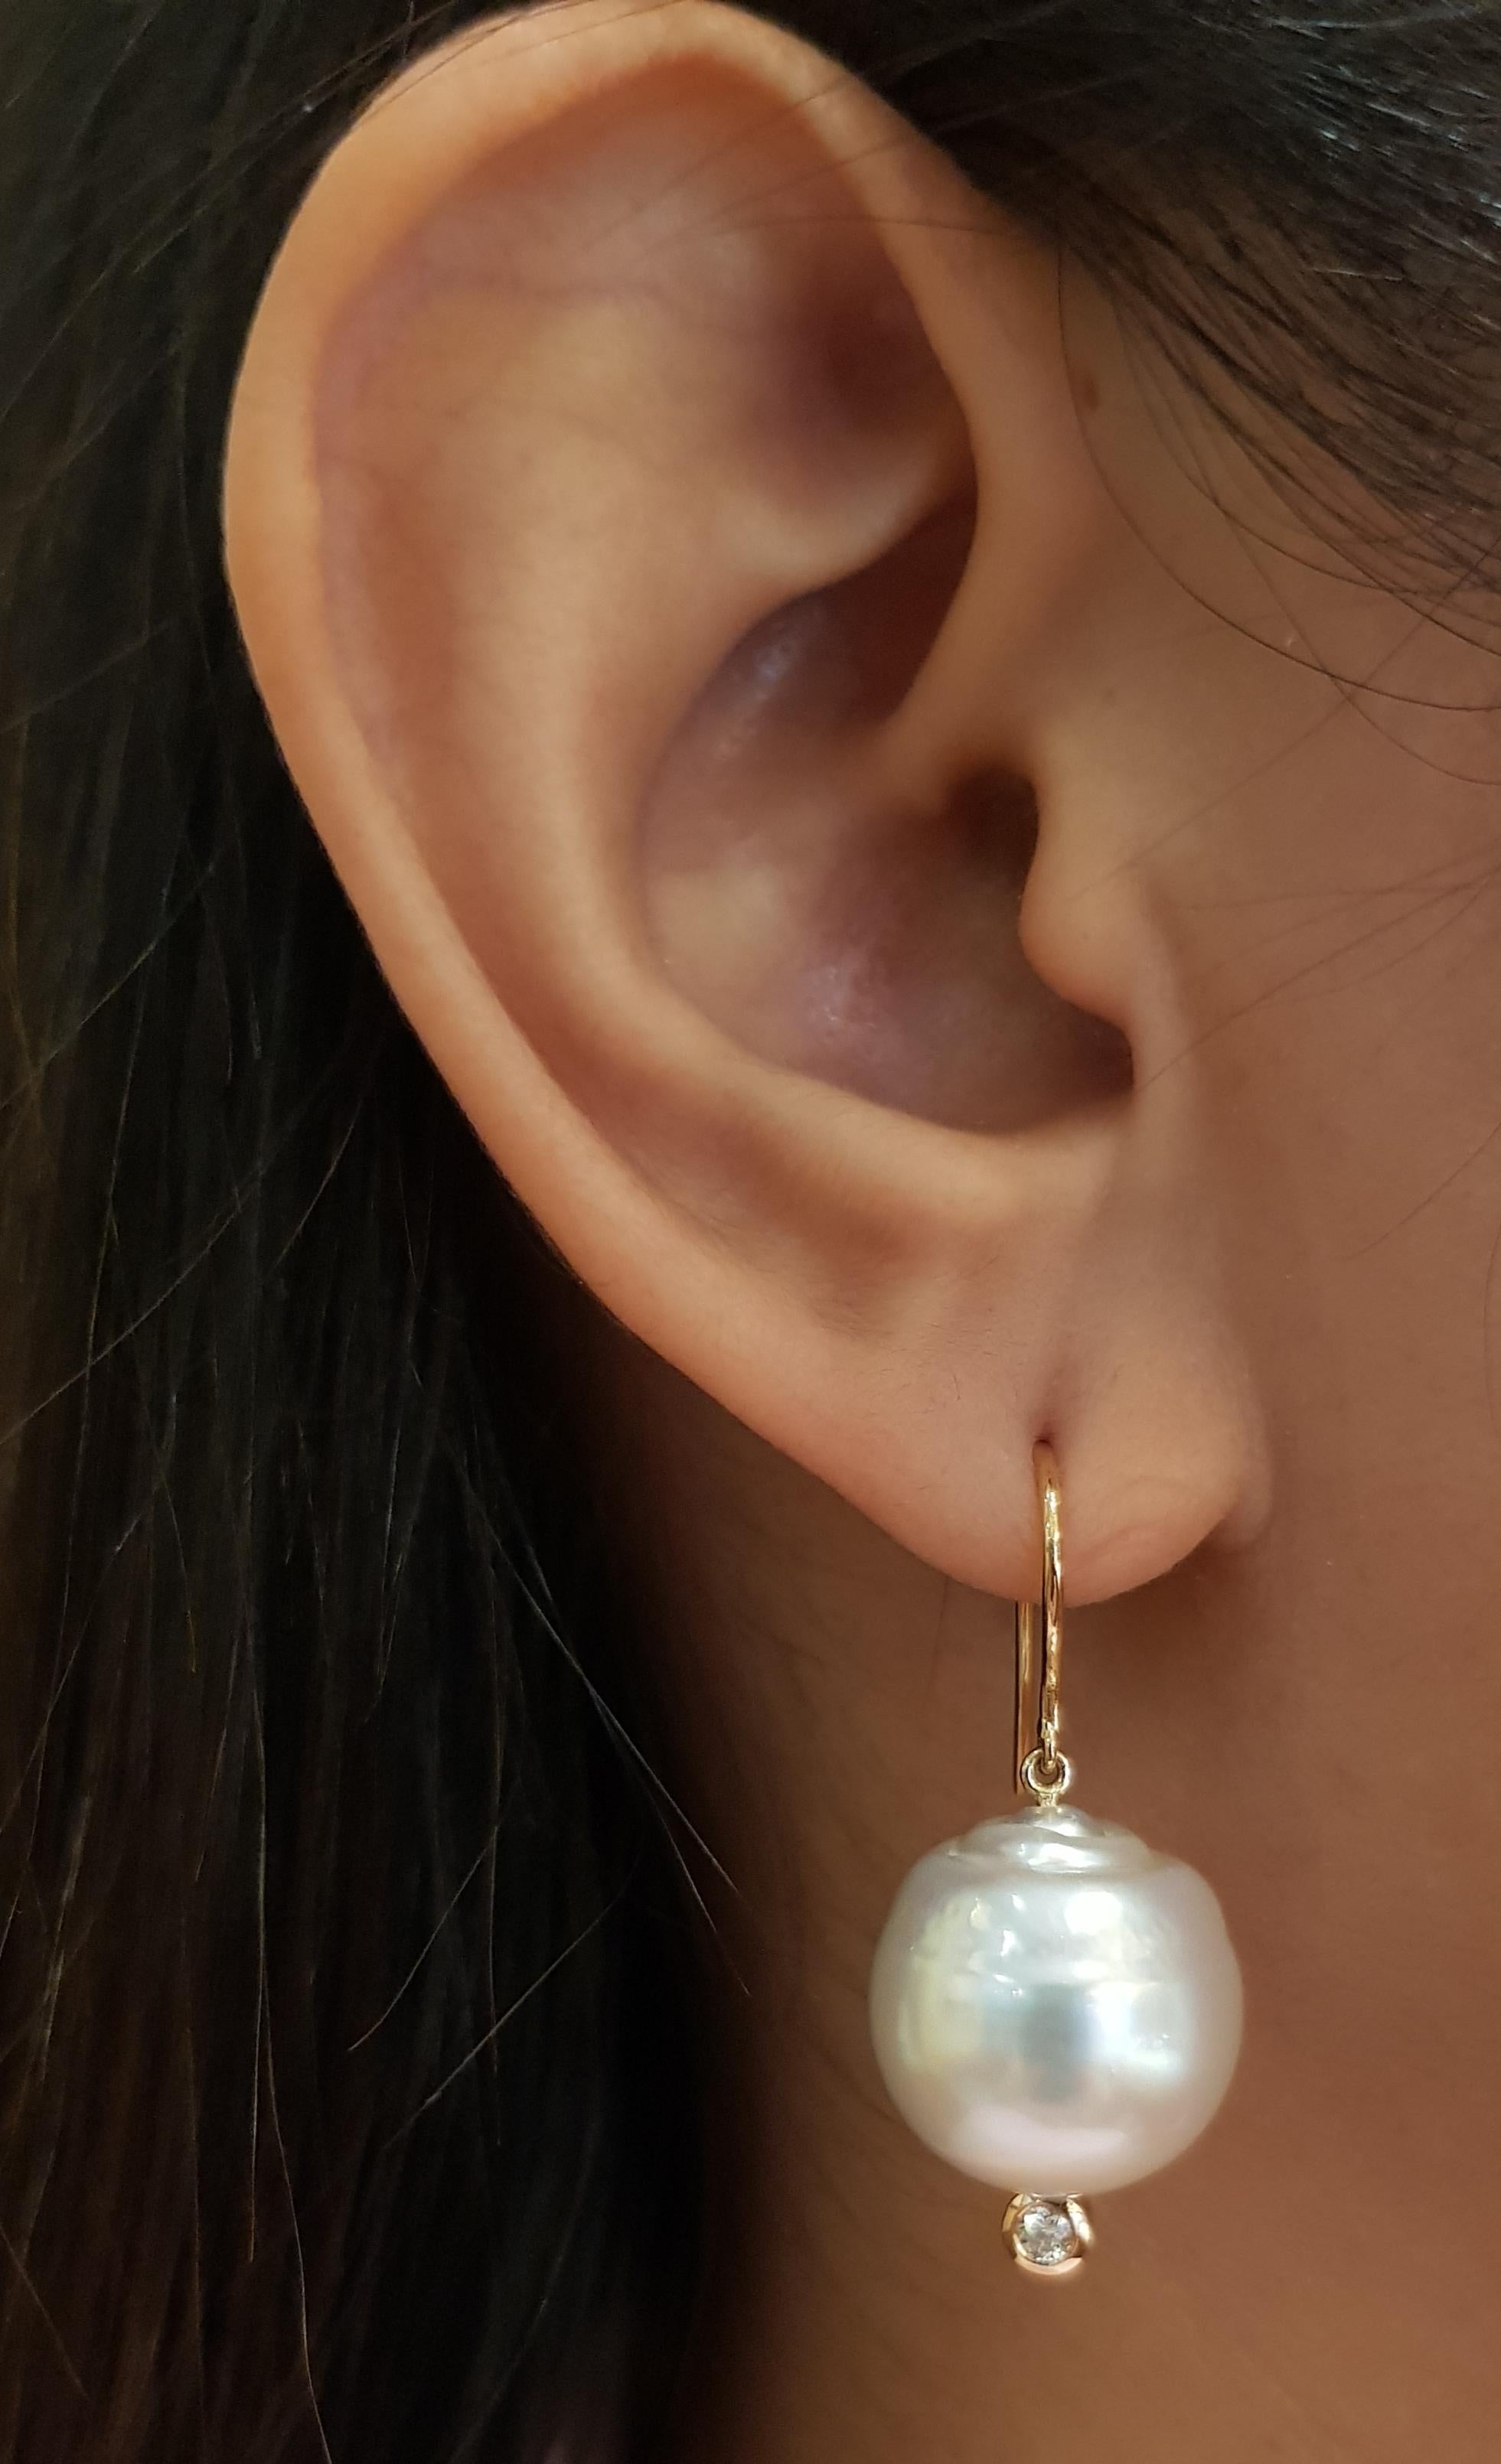 South Sea Pearl with Diamond 0.10 carat Earrings set in 18 Karat Rose Gold Settings

Width:  1.4 cm 
Length:  3.5 cm
Total Weight: 11.42 grams

South Sea Pearl: 15 mm

